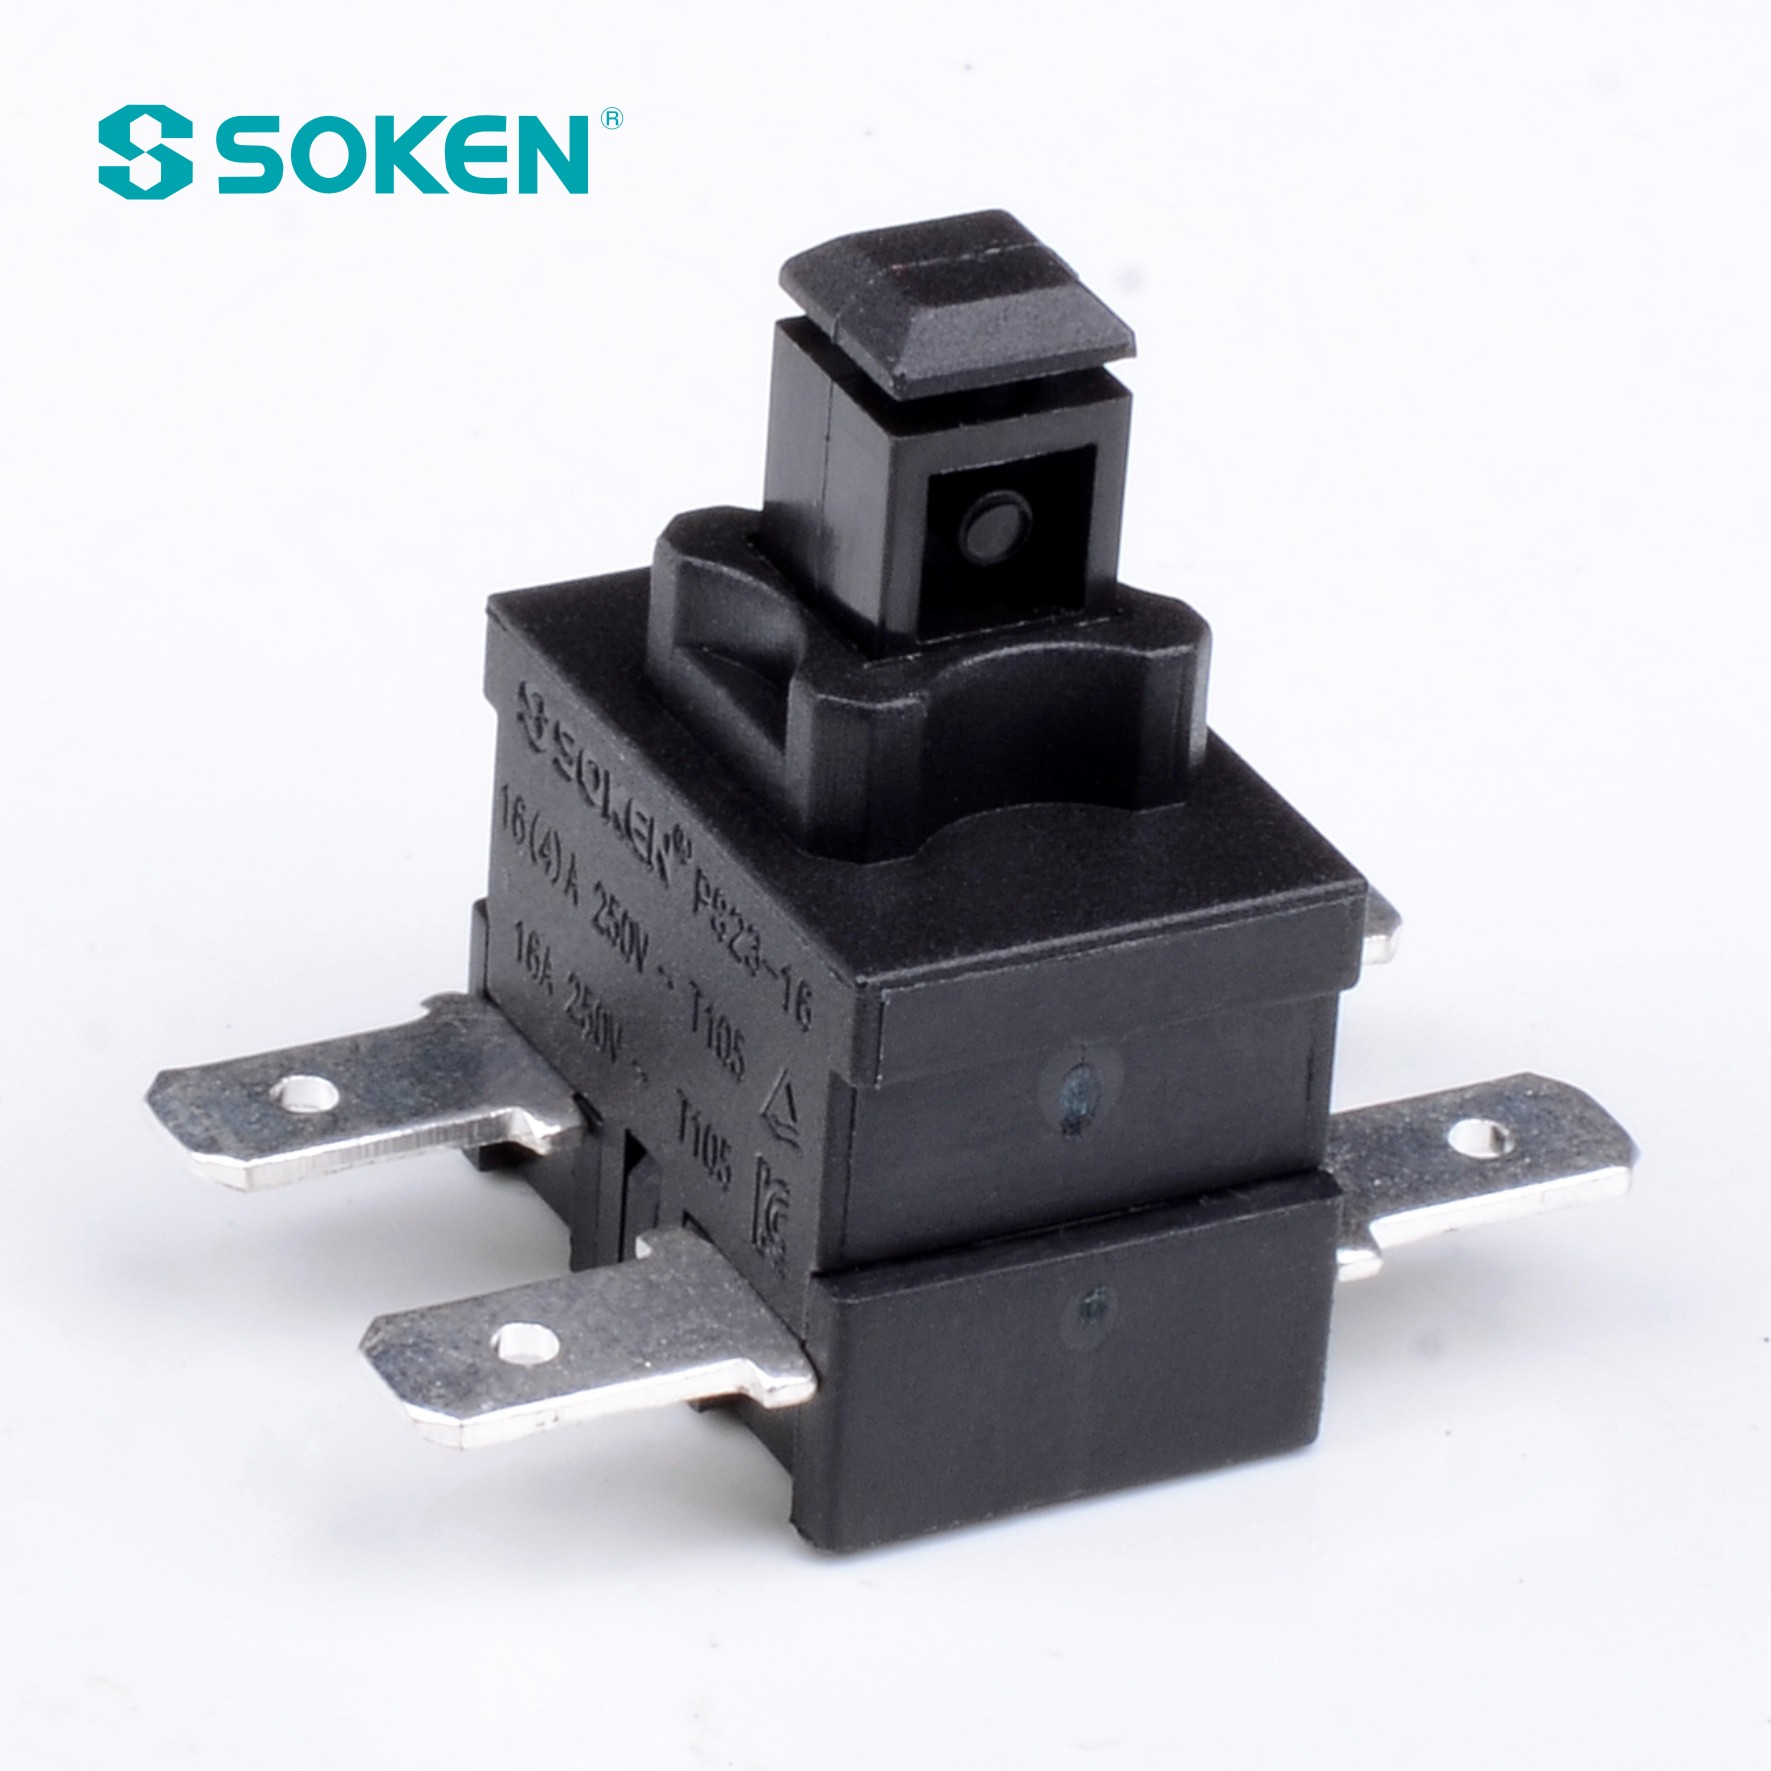 Soken Push Button Reset Switch PS23-16-2D 2 polo